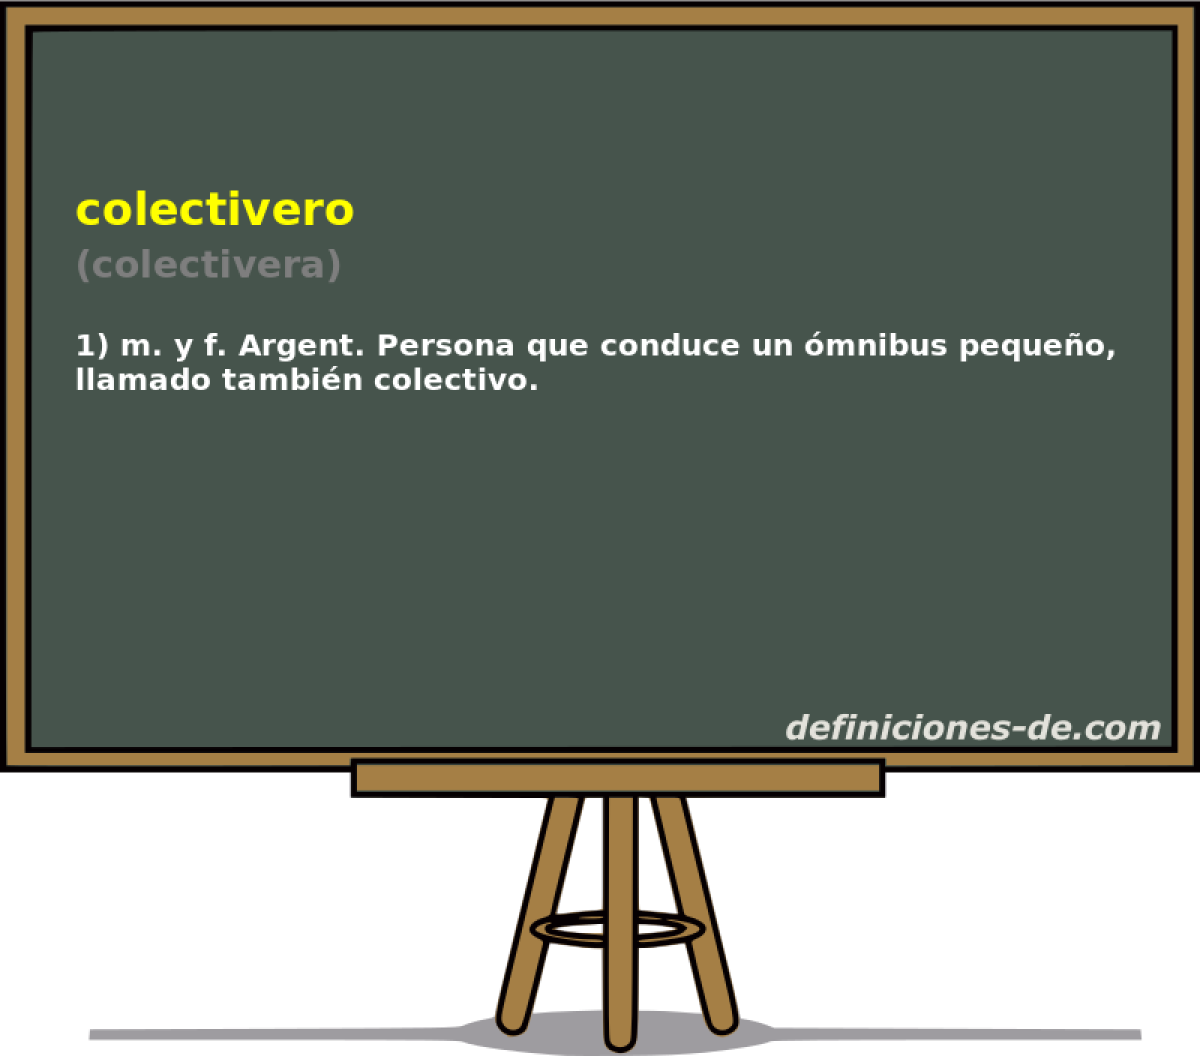 colectivero (colectivera)